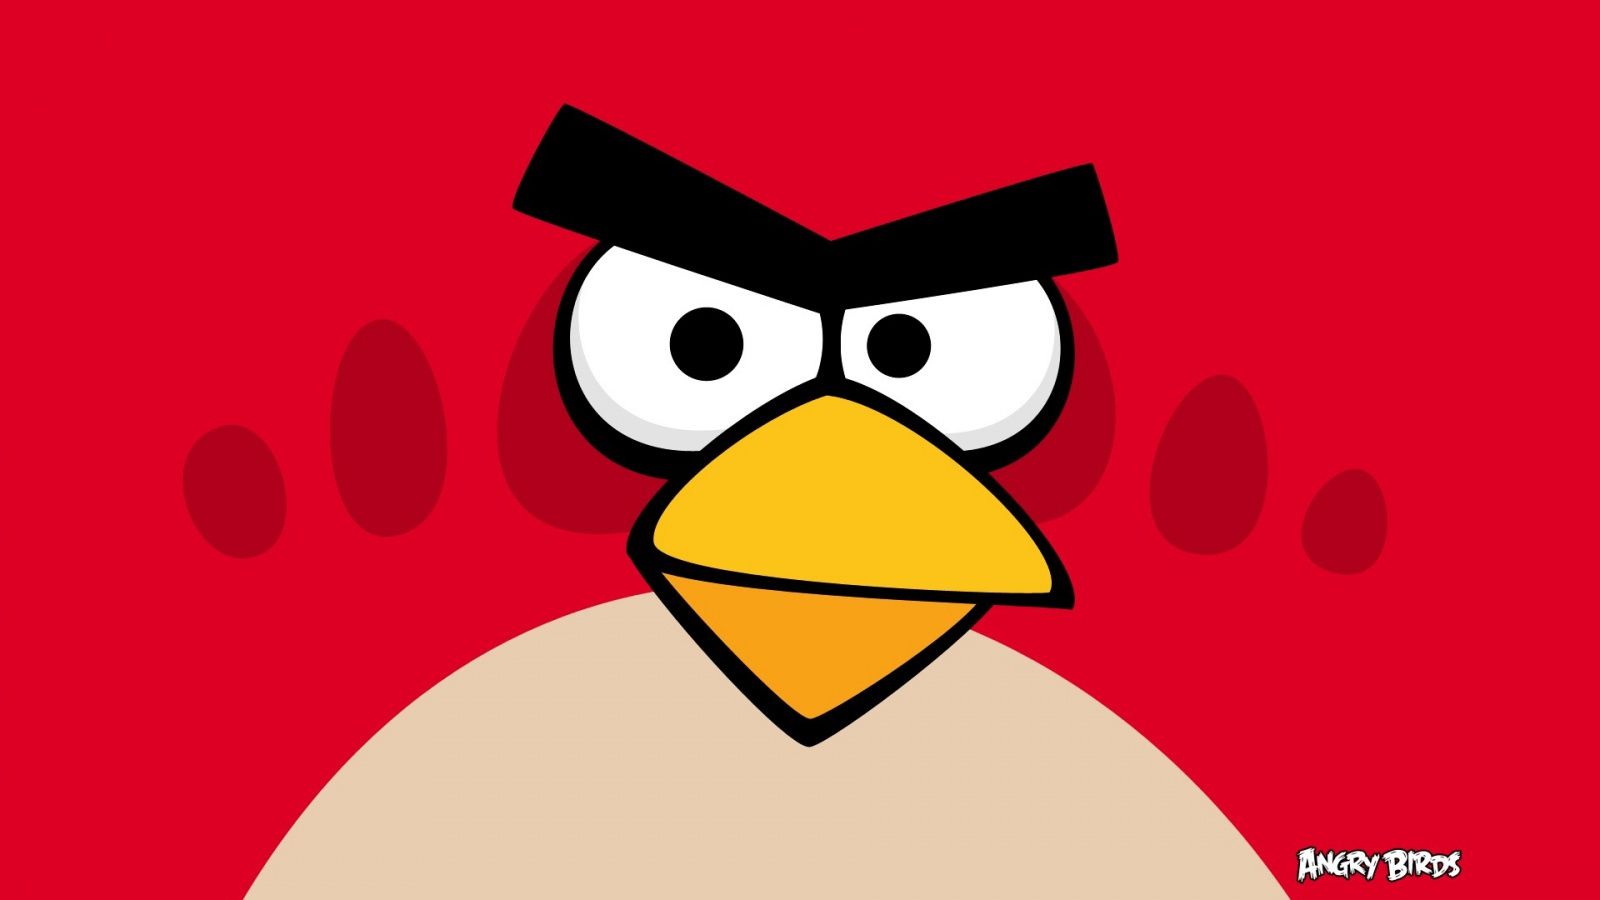 Angry Birds Big Red Bird Wallpaper, Size 1600x900 AmazingPict